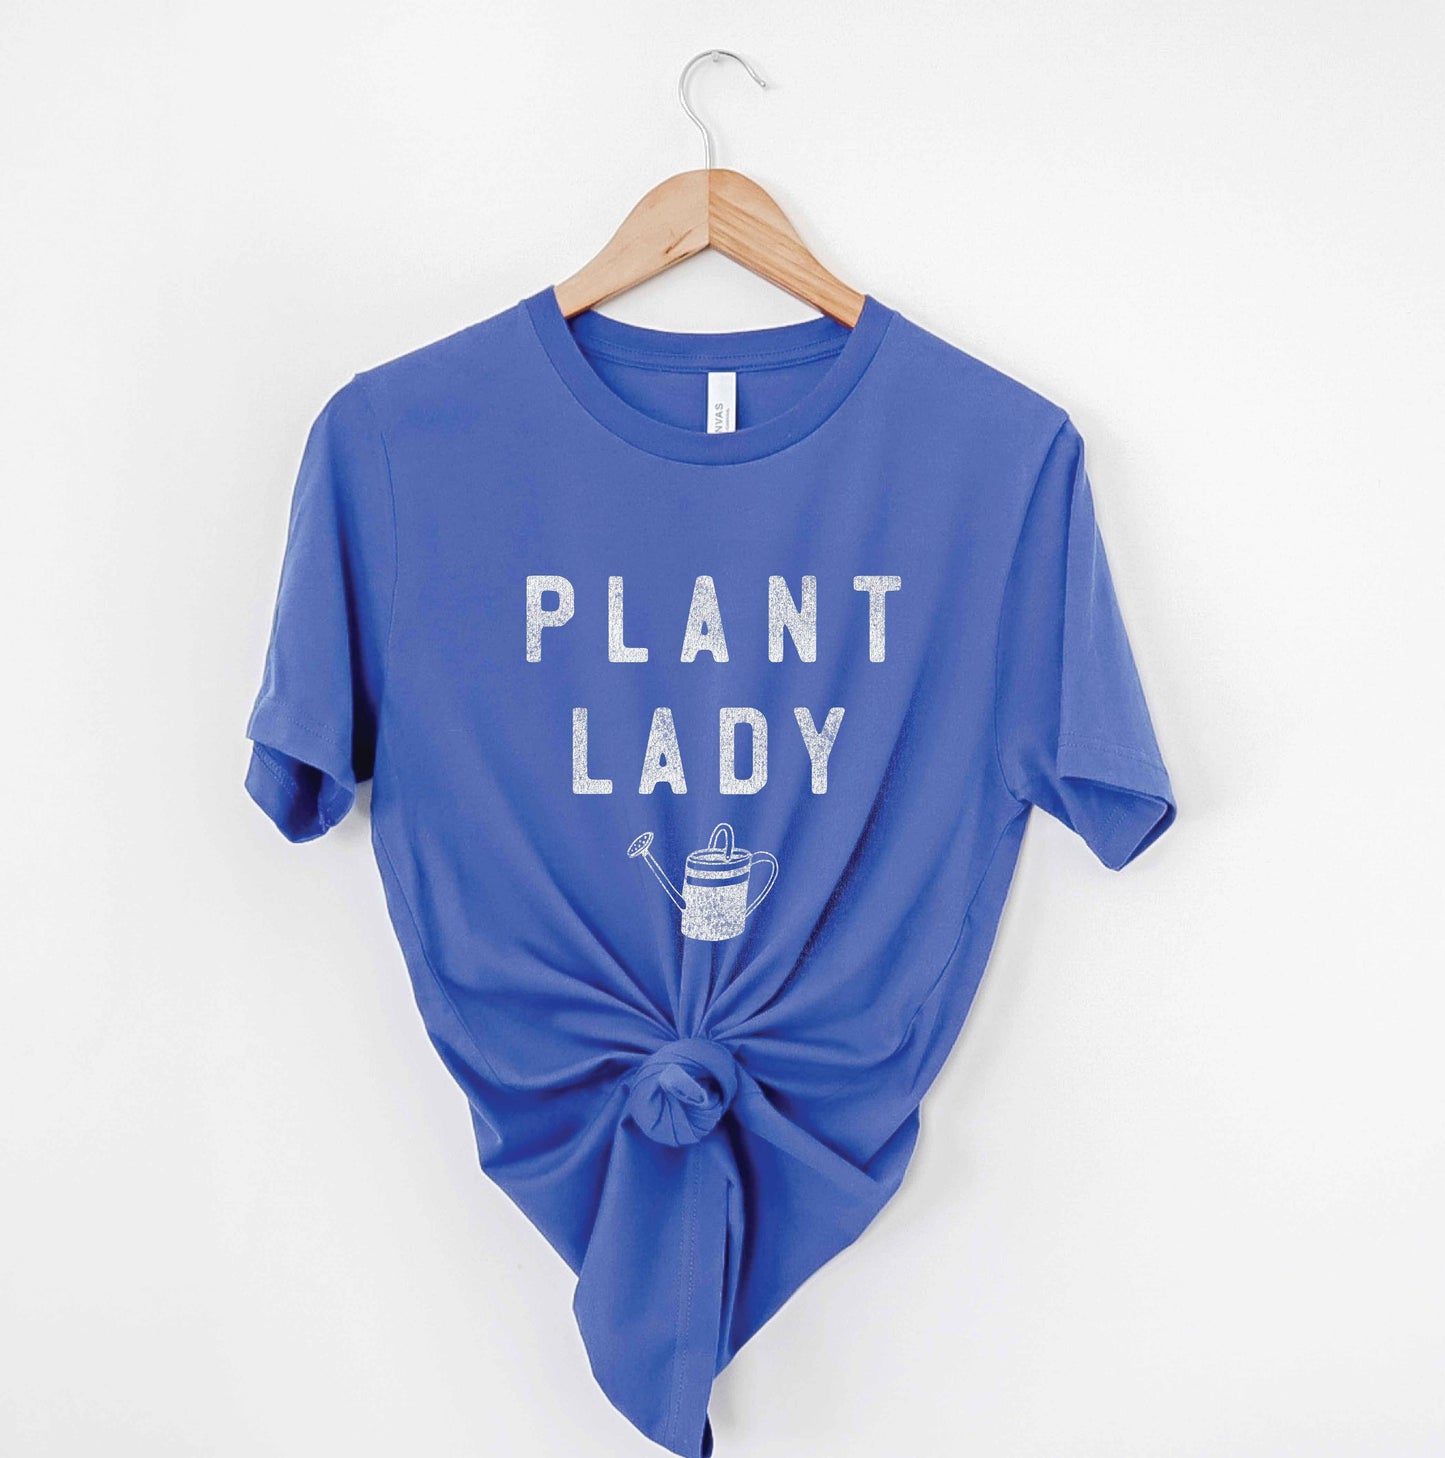 PLANT LADY Graphic T-Shirt